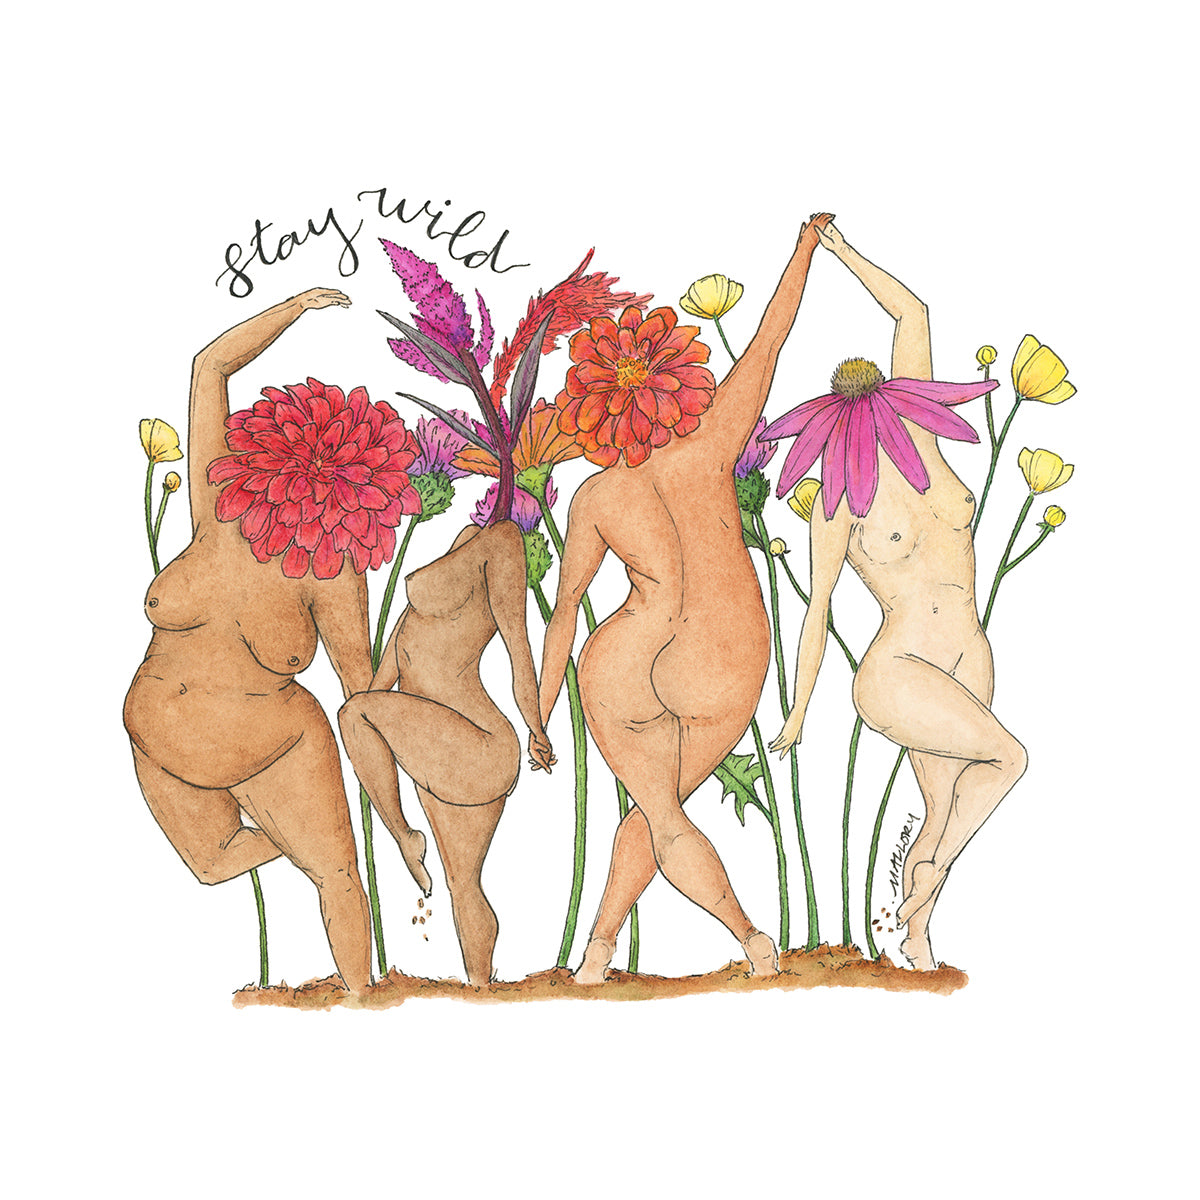 Stay Wild Wildflower Ladies 8x10